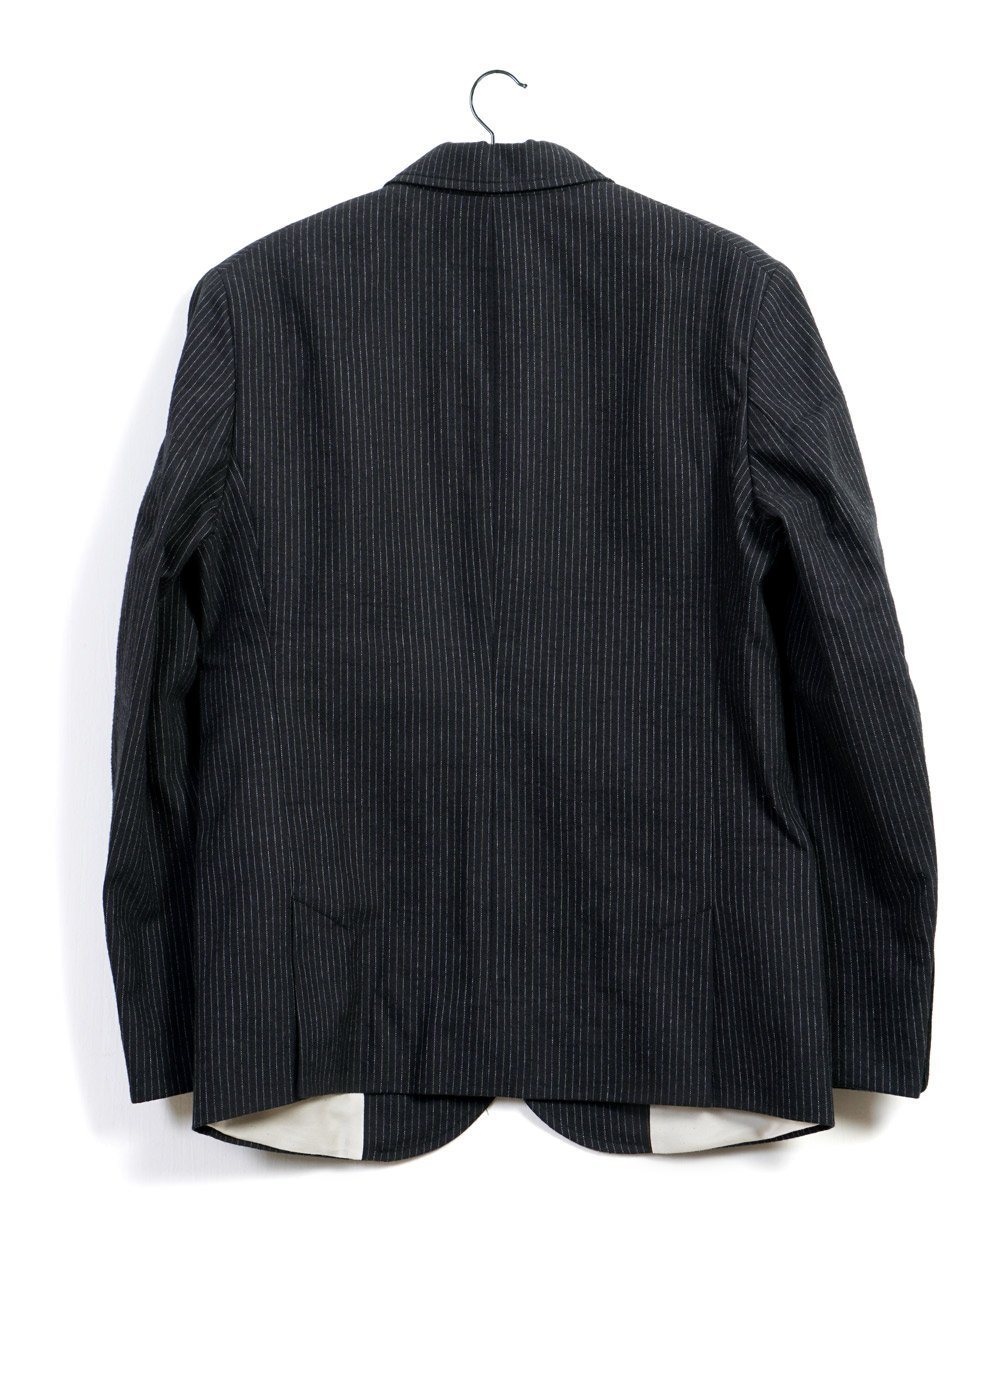 ANKER | Casual 4-button Blazer | Black Pin | €450 -HANSEN Garments- HANSEN Garments